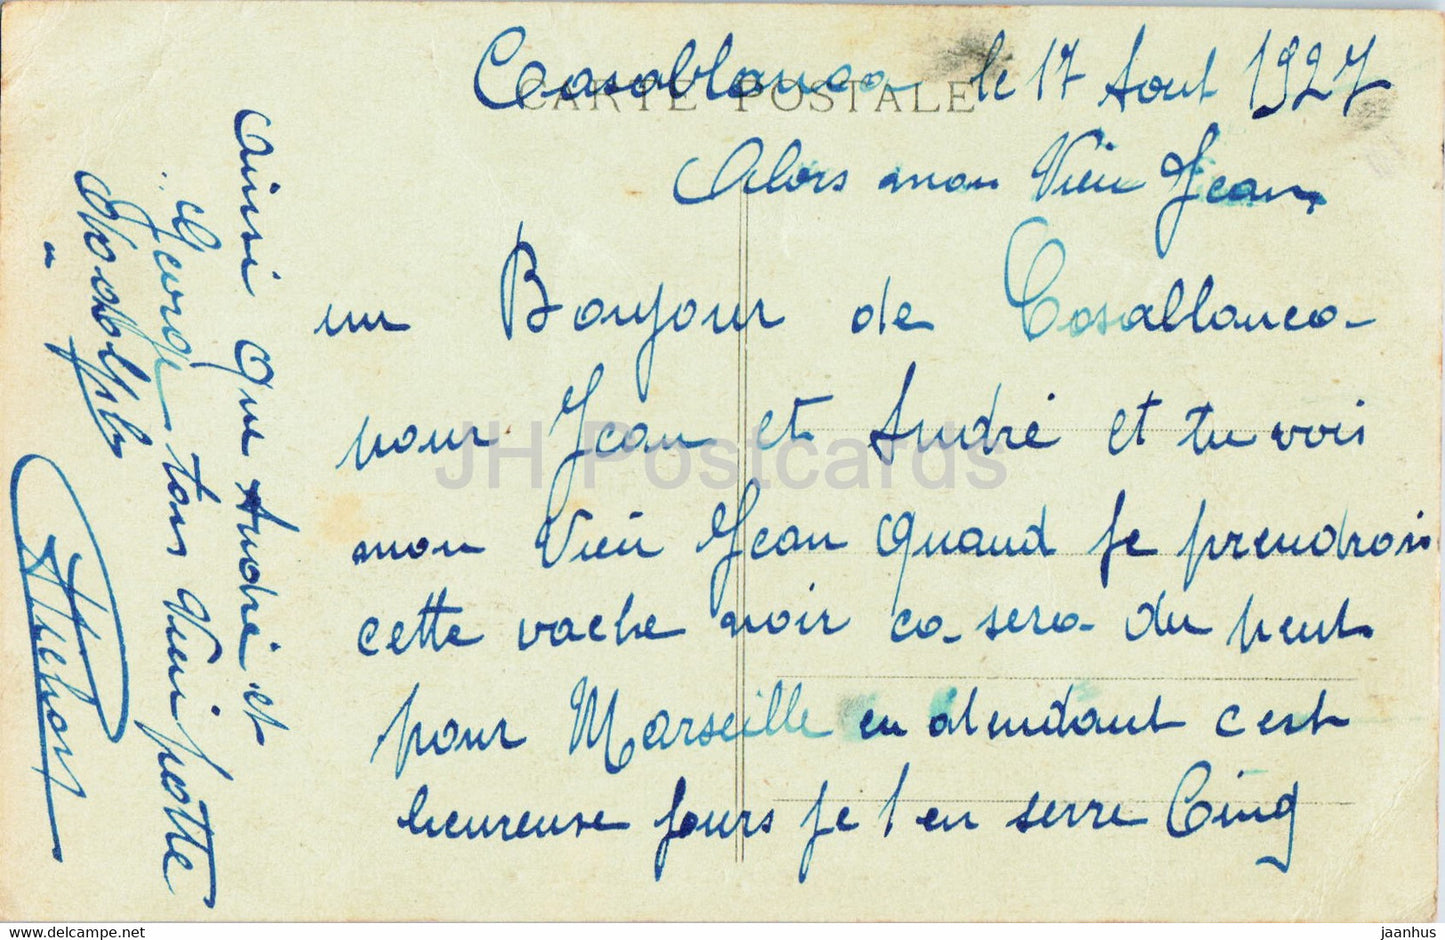 L'Anfa - Courrier de Marseille - ship - steamer - 163 - old postcard - 1927 - France - used